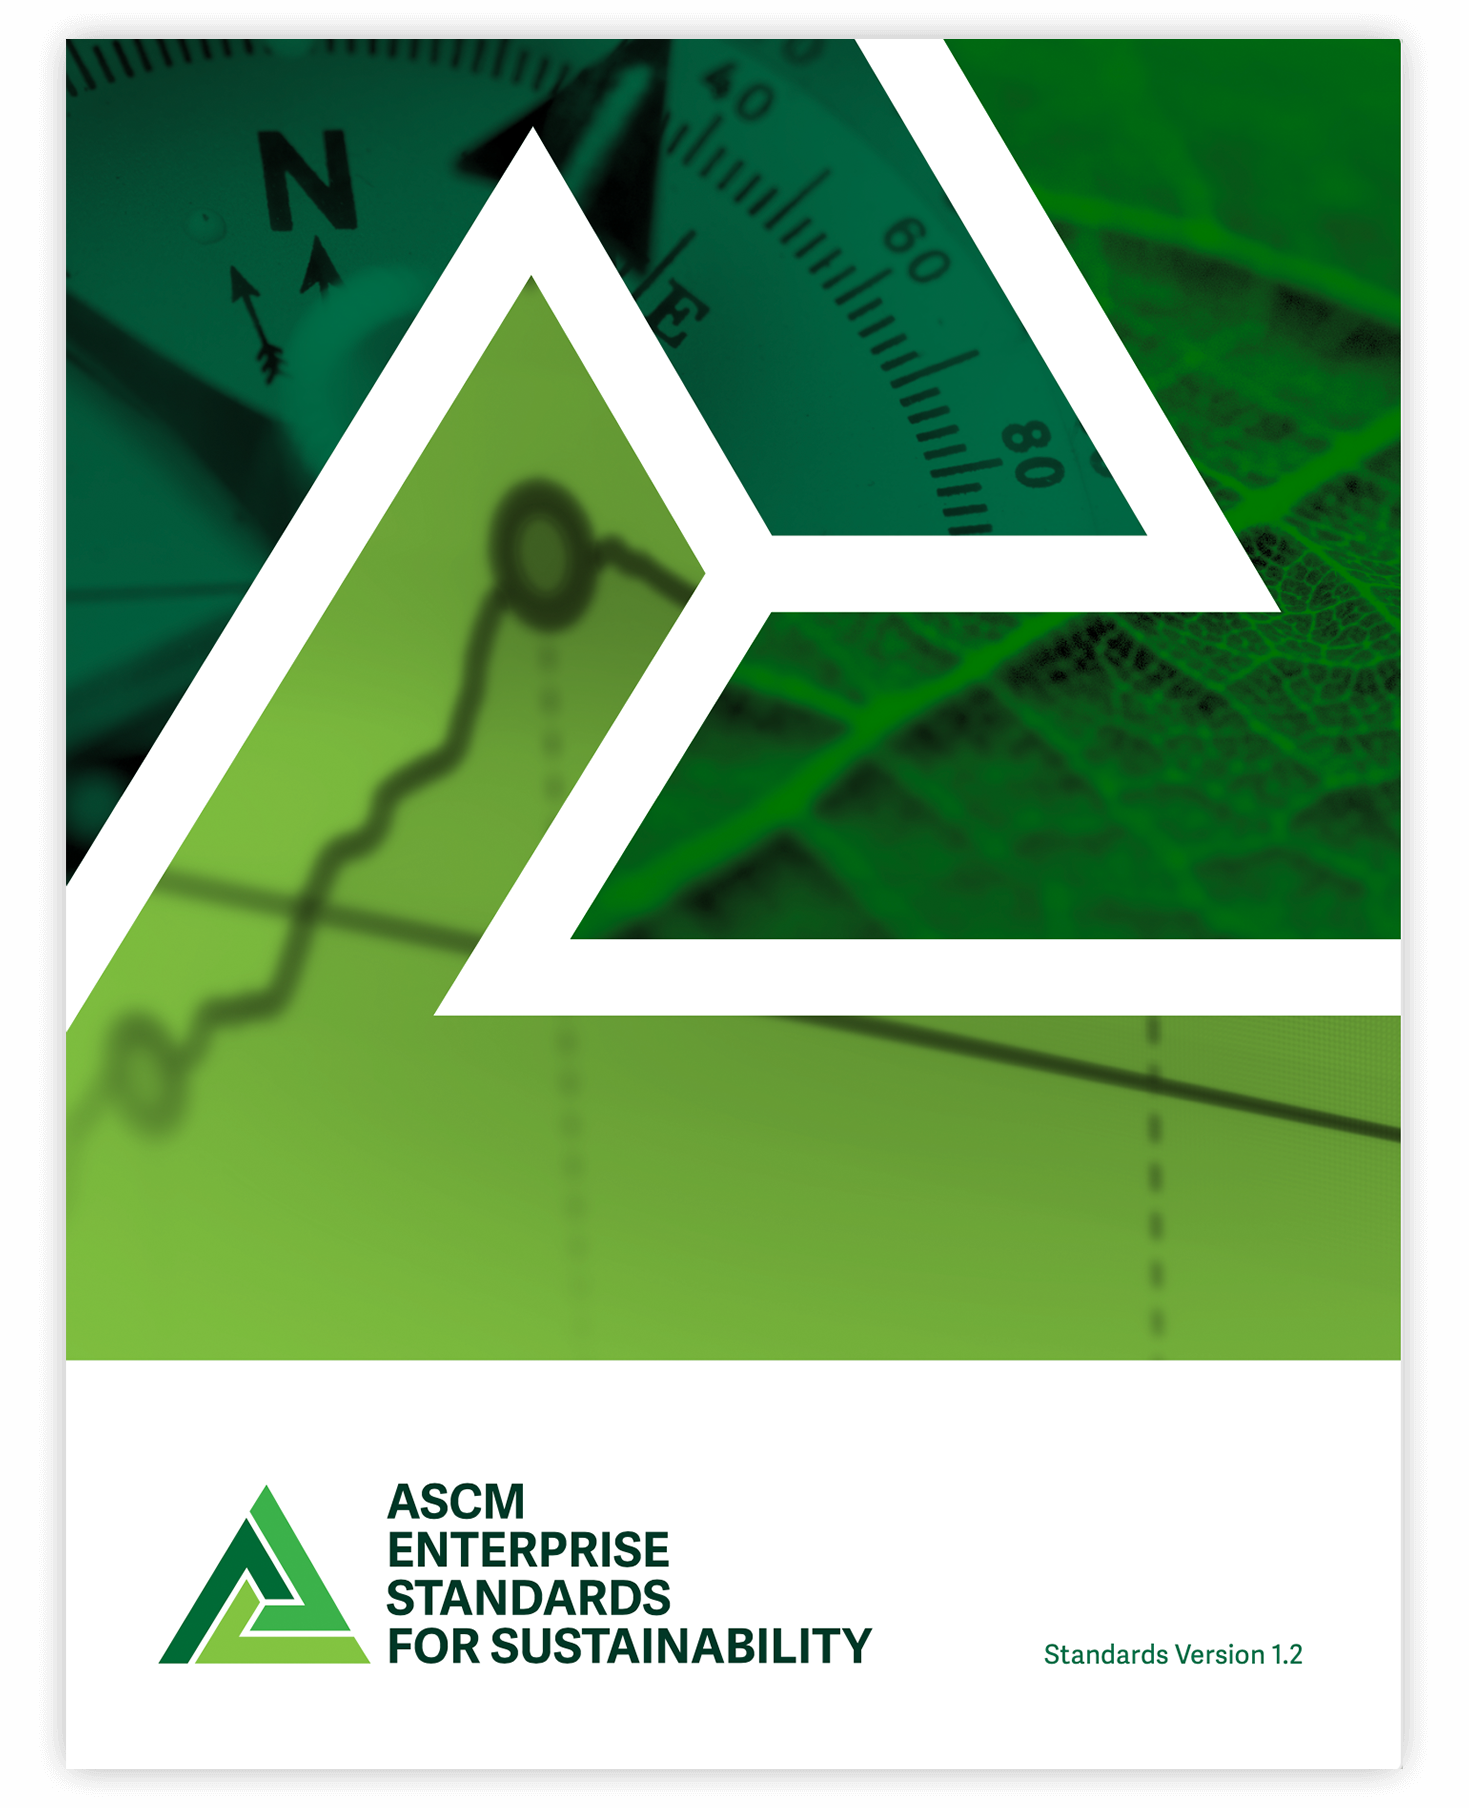 ASCM Enterprise Standards for Sustainability